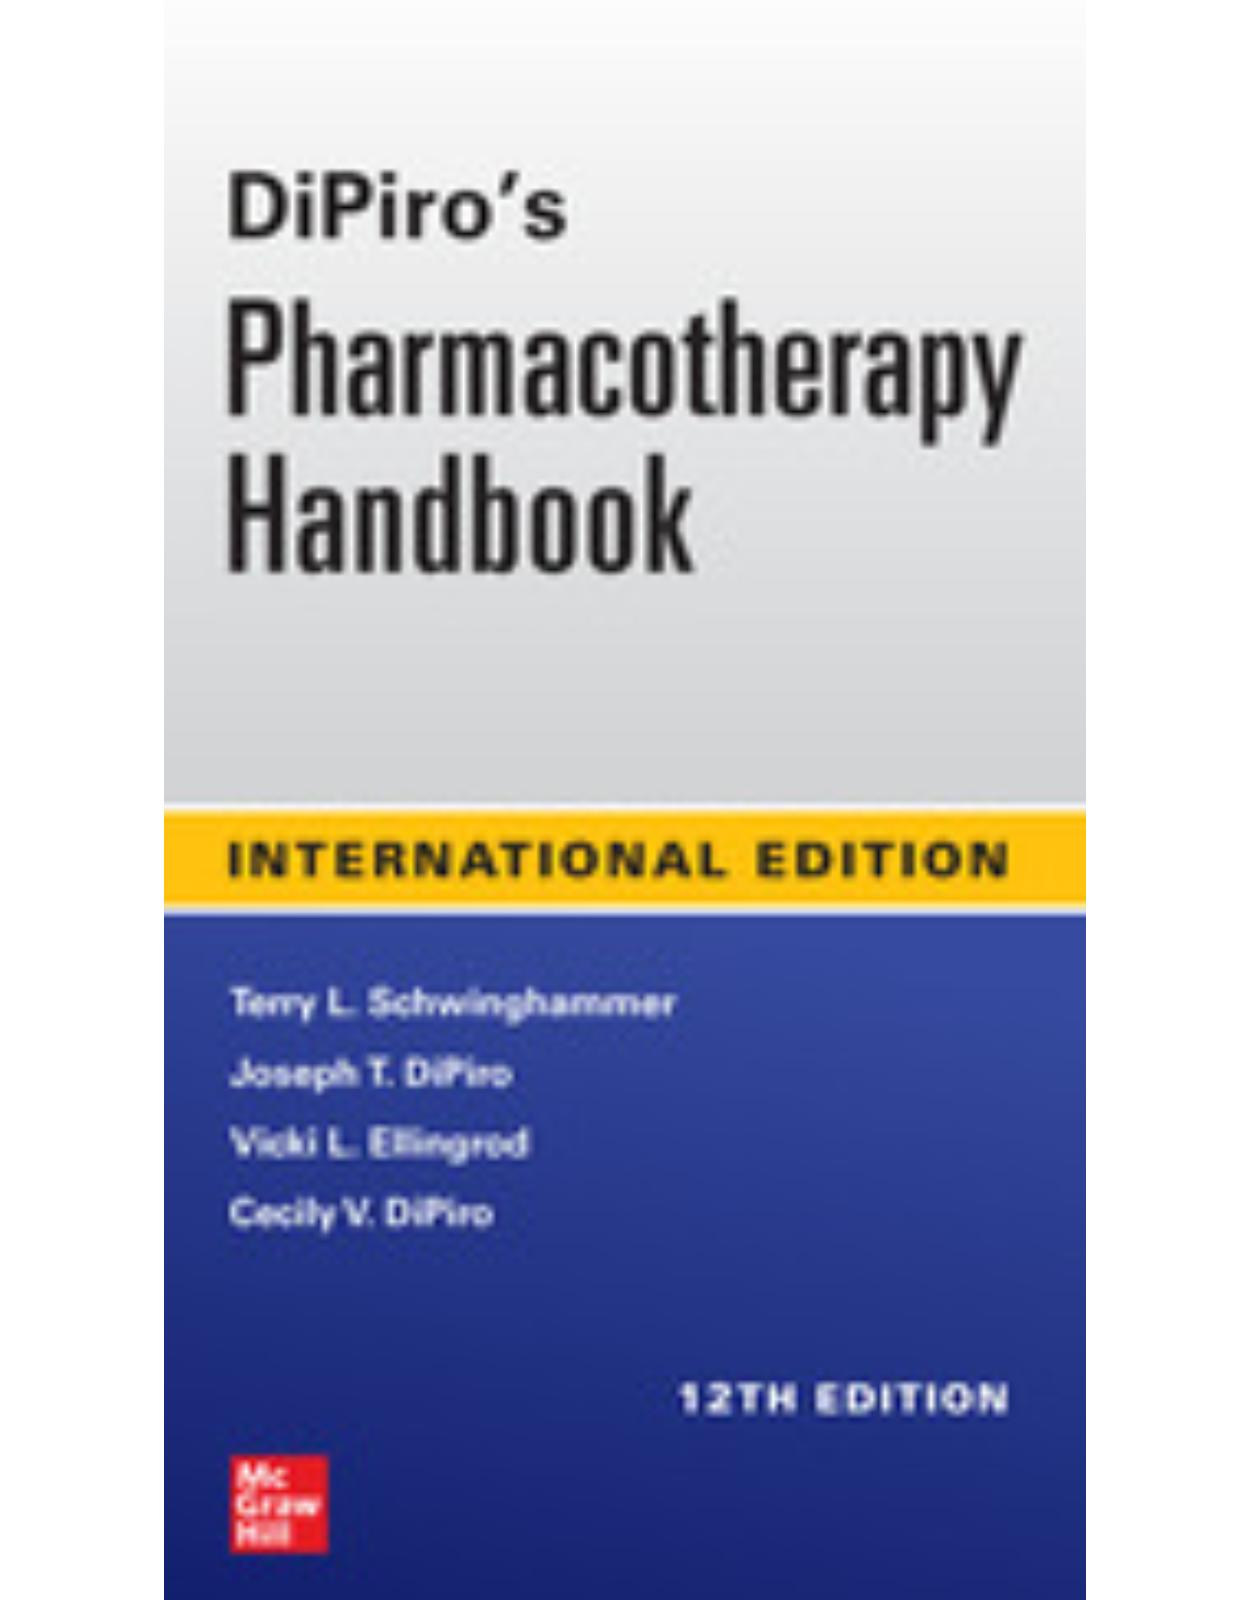 DiPiro’s Pharmacotherapy Handbook